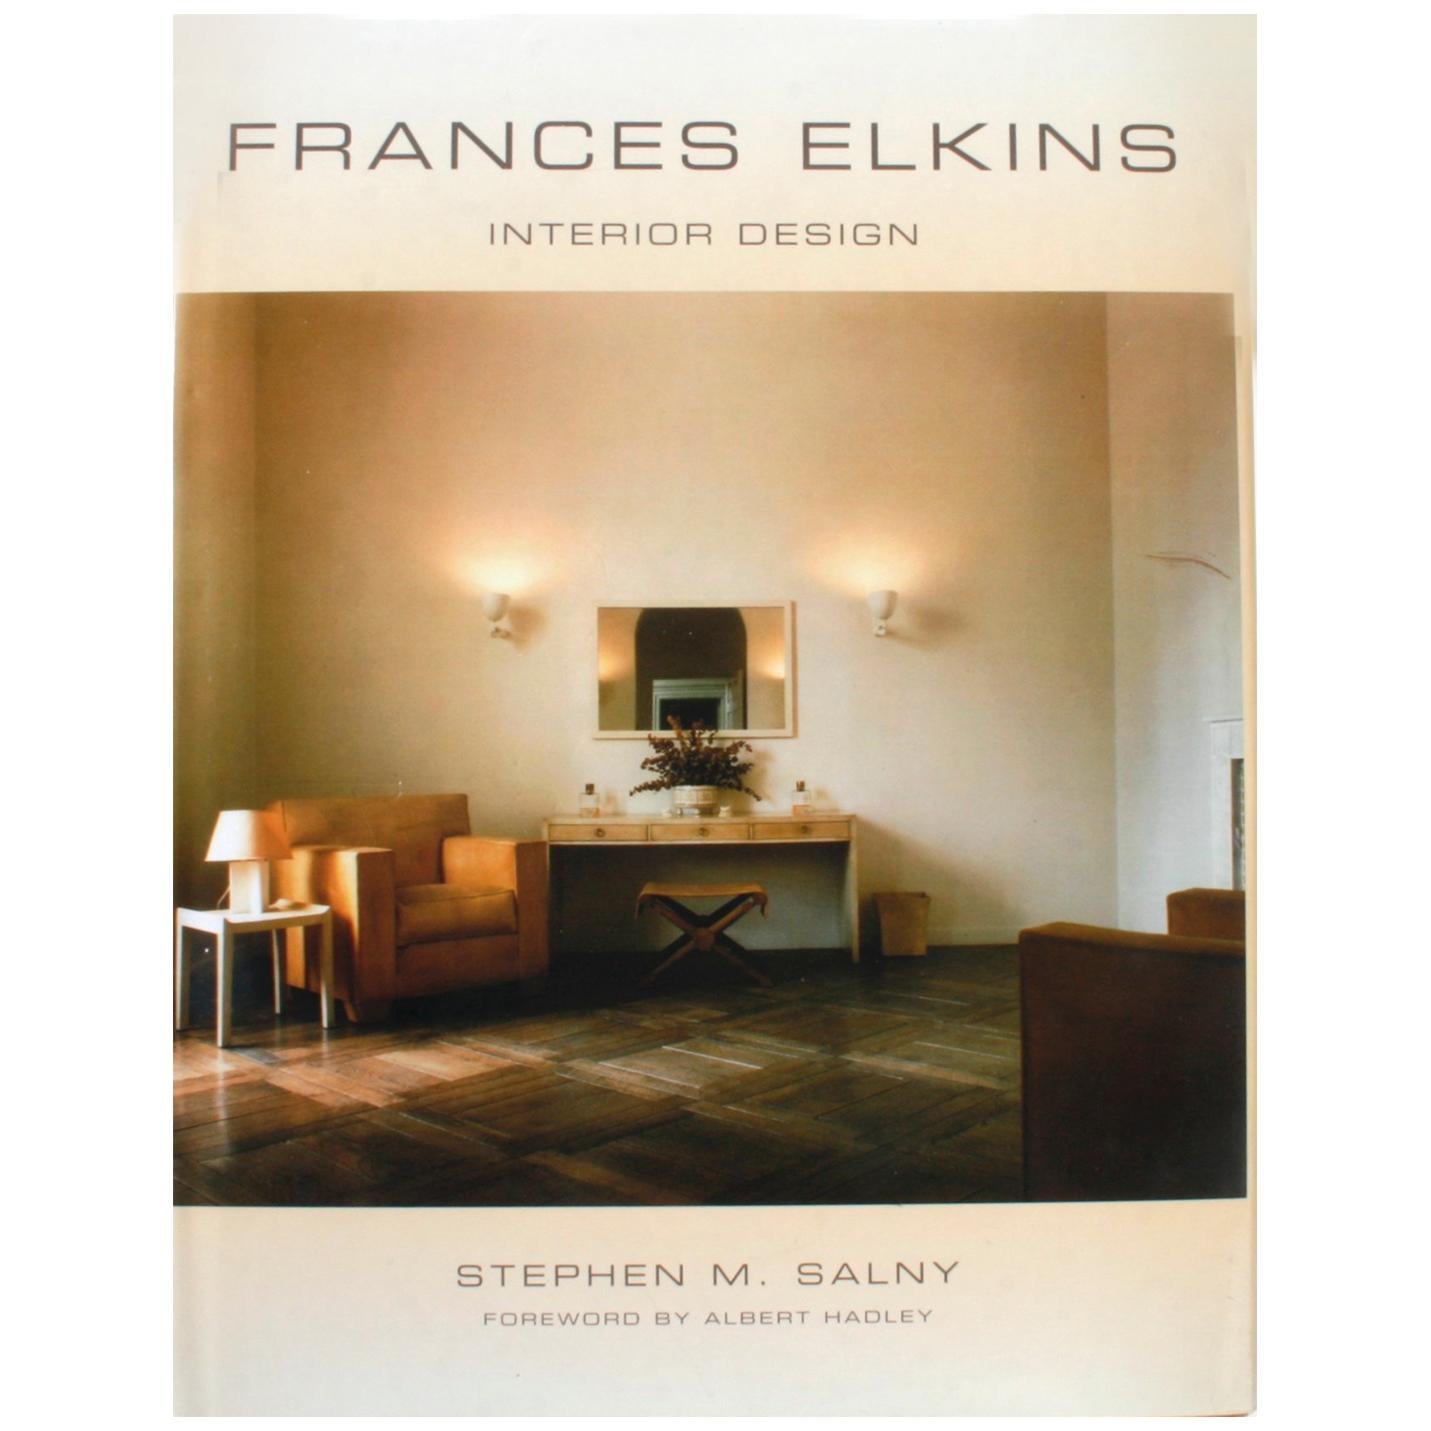 Frances Elkins, Interior Design by Stephen Salny, Forward by Albert Hadley